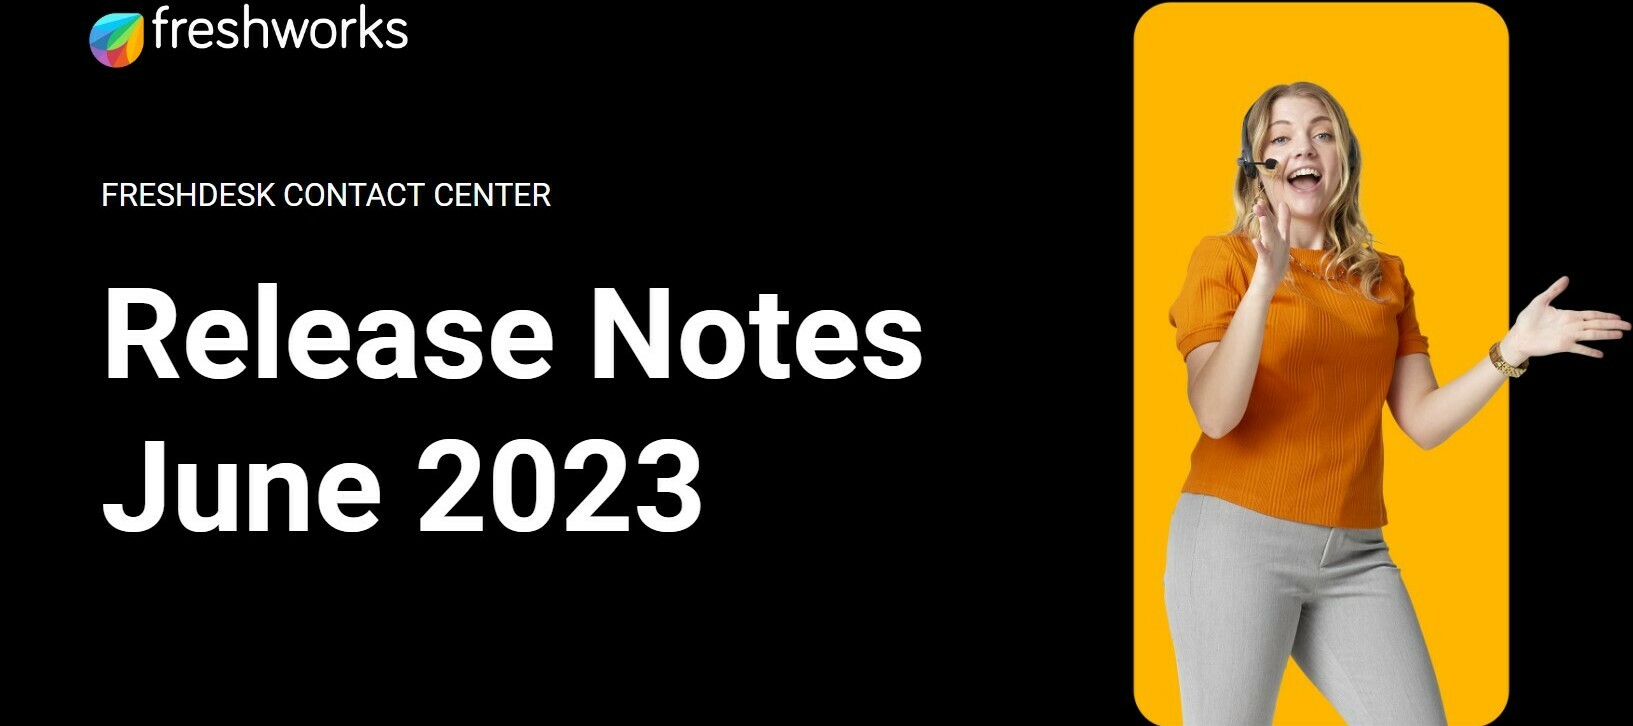 Freshdesk Contact Center Release Notes - June 2023